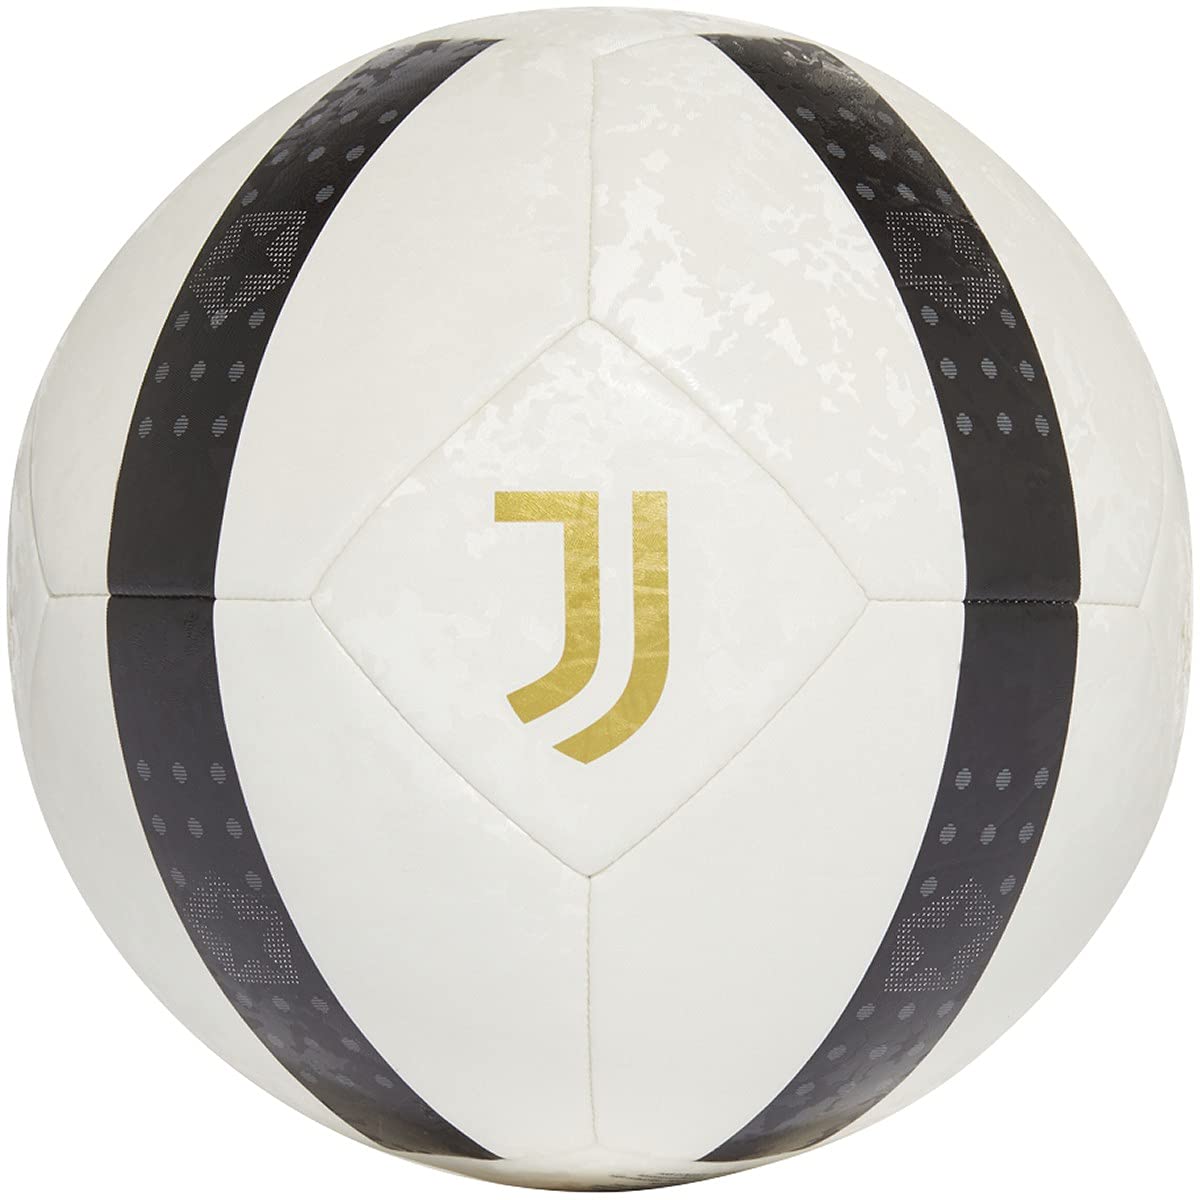 Adidas Unisex-Adult Juventus Turin Club Home Soccer Ball